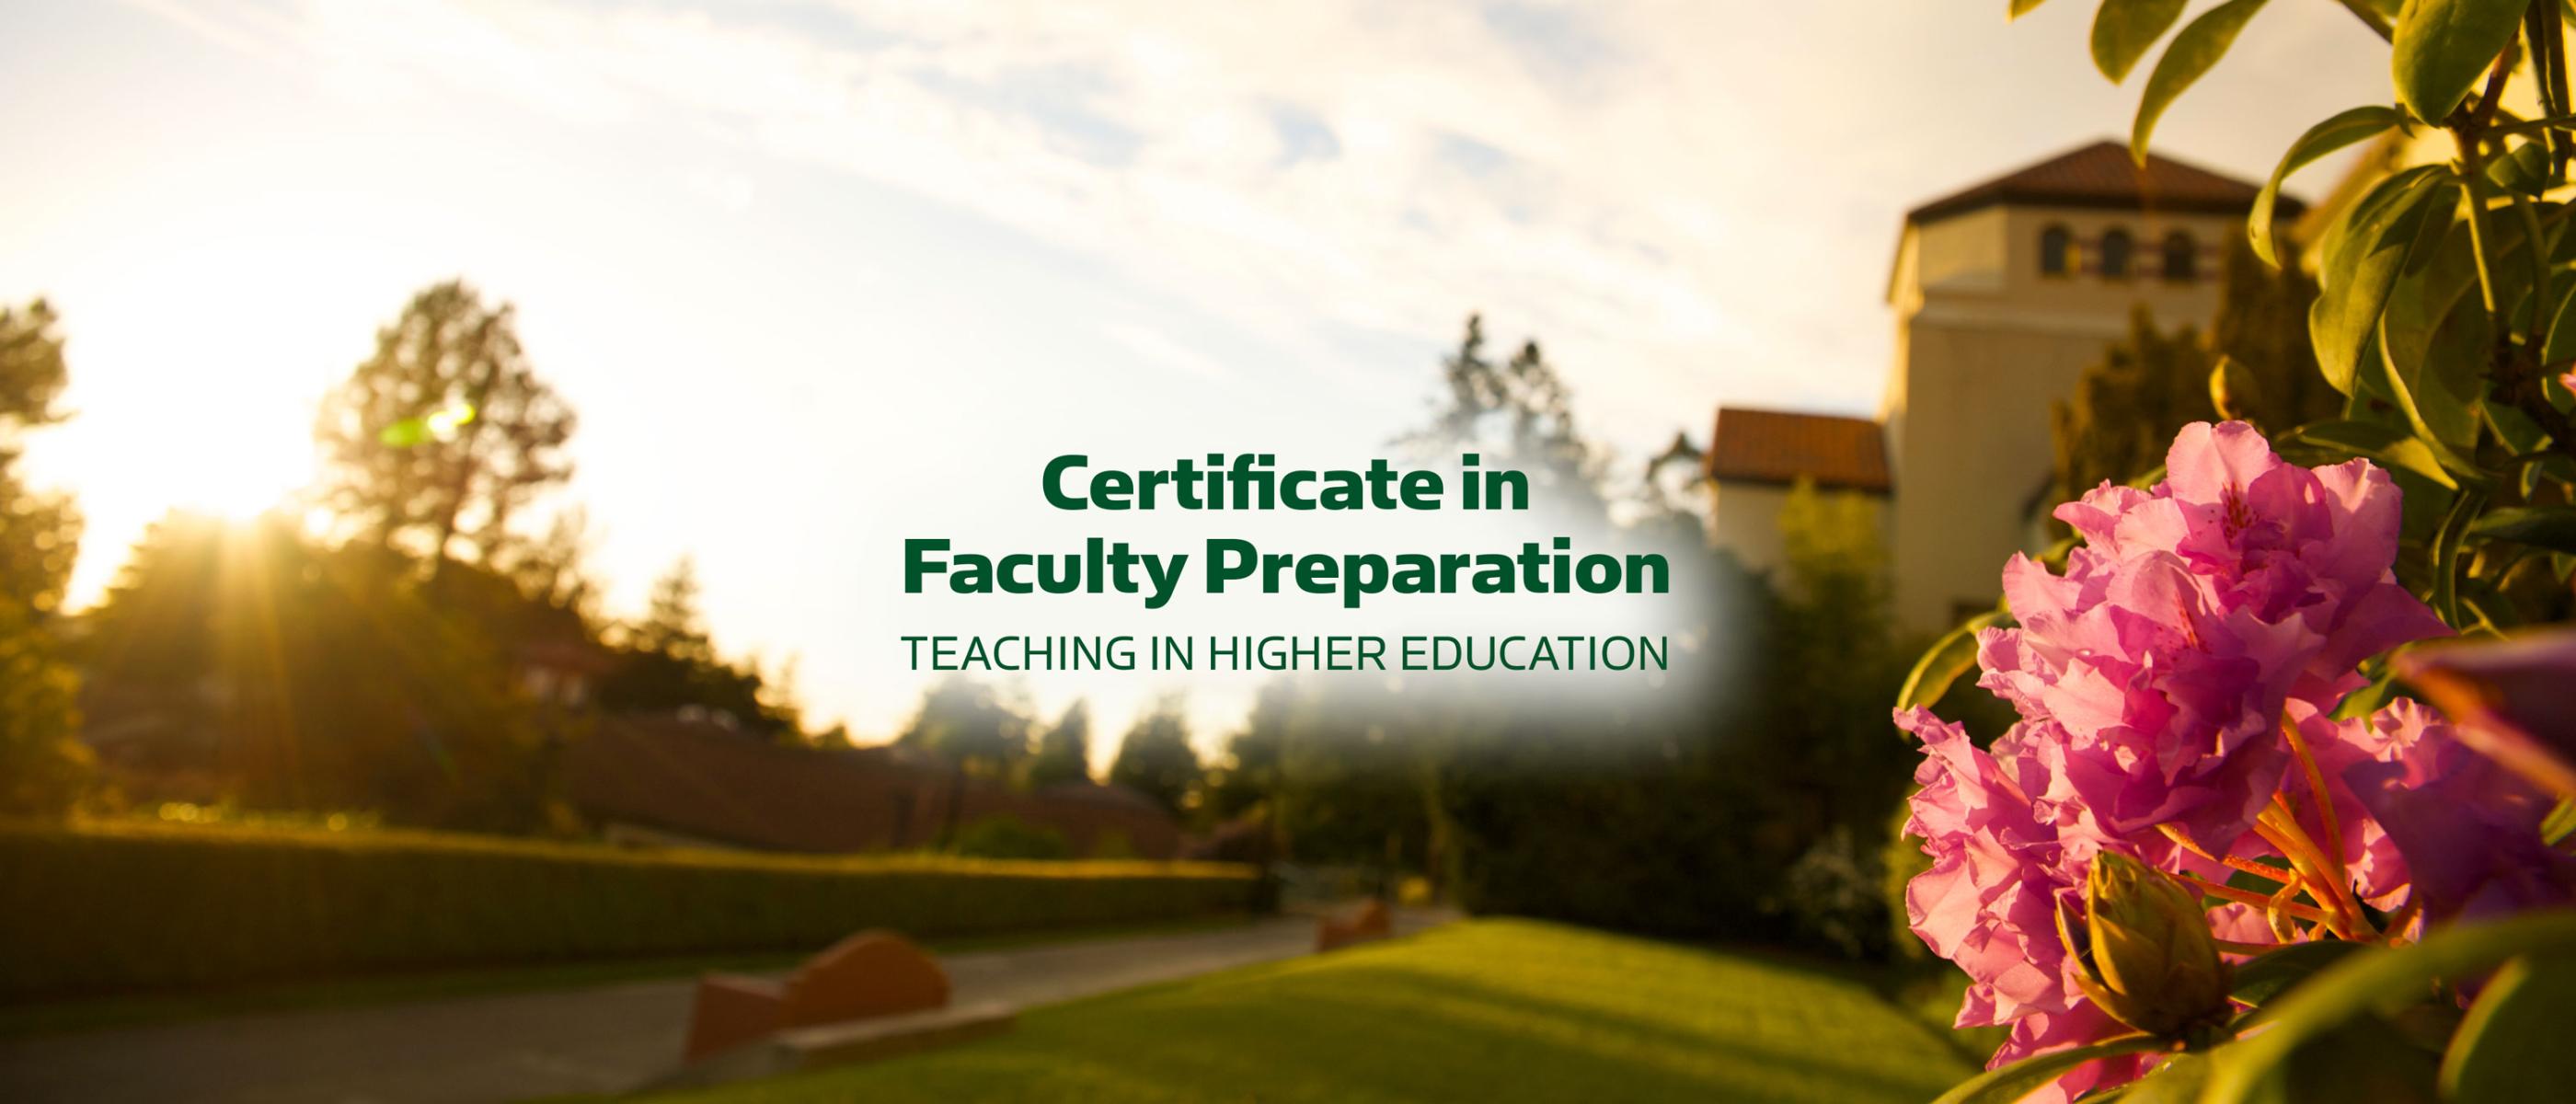 Certificate in Faculty Preparation: Teaching in Higher Education